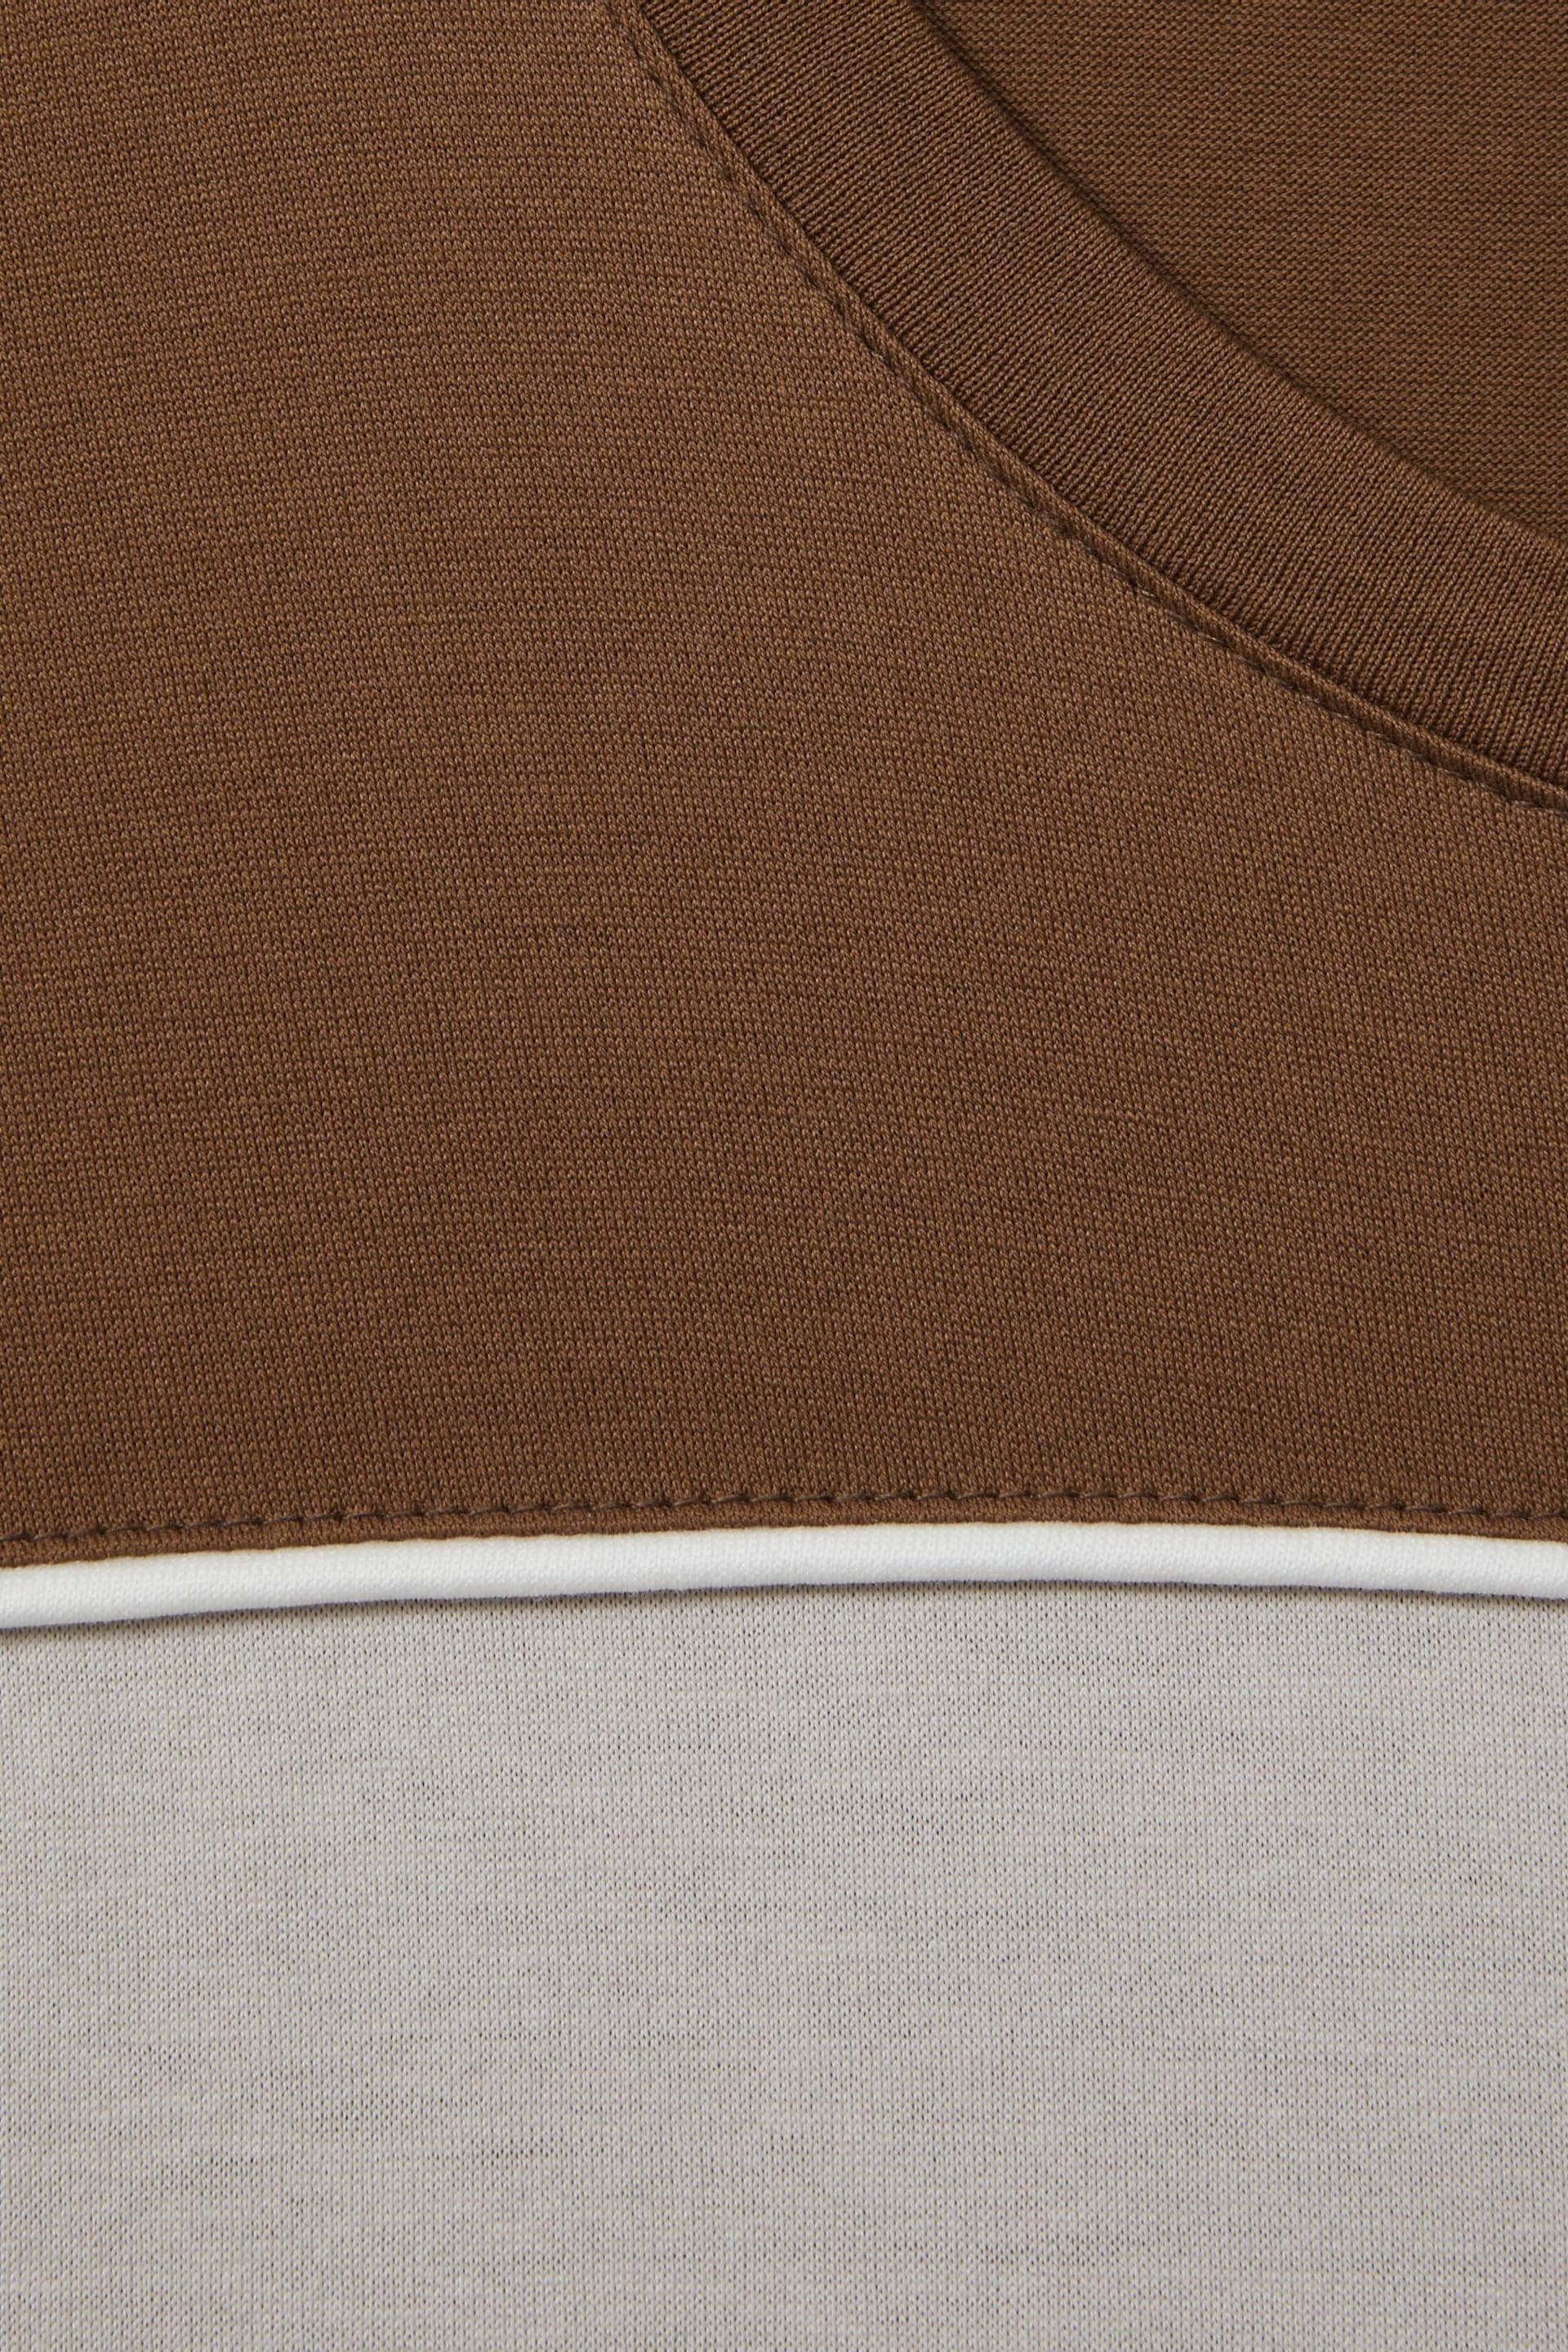 Reiss Camel Brown/White Woods Mercerised Cotton Colourblock Crew Neck T-Shirt - Image 5 of 5